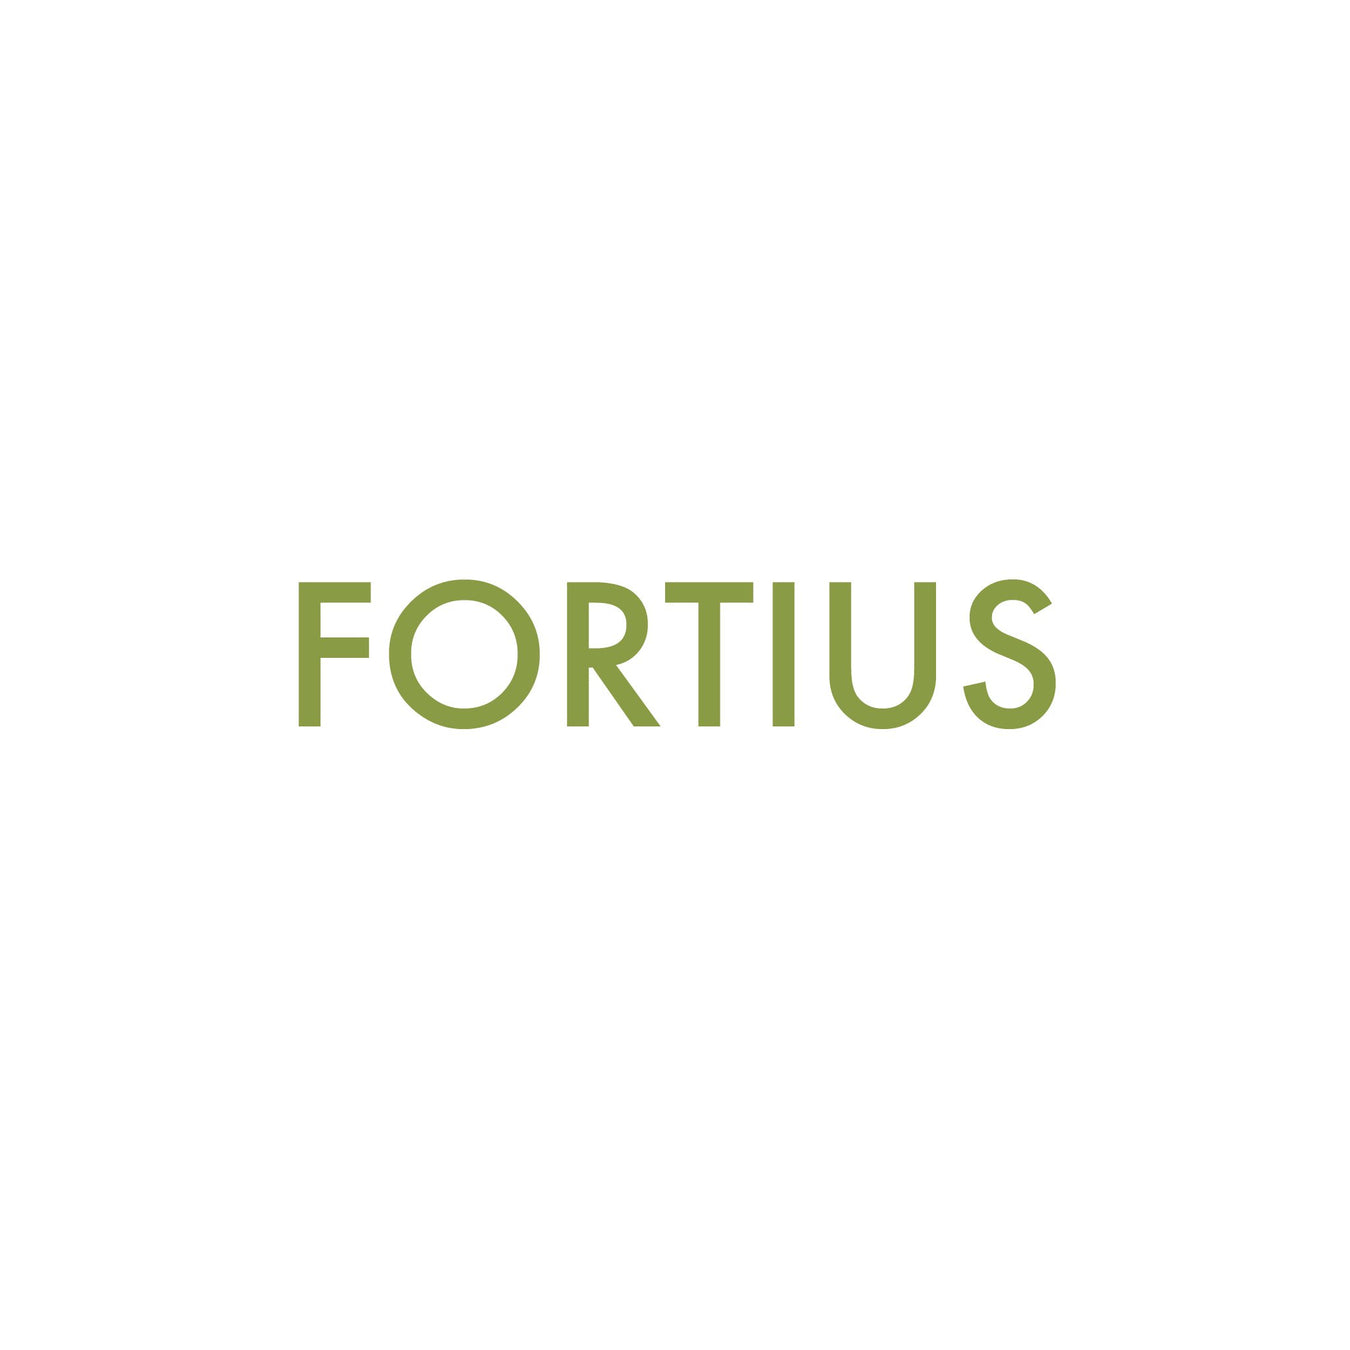 Fortius - Gecko Catering Equipment